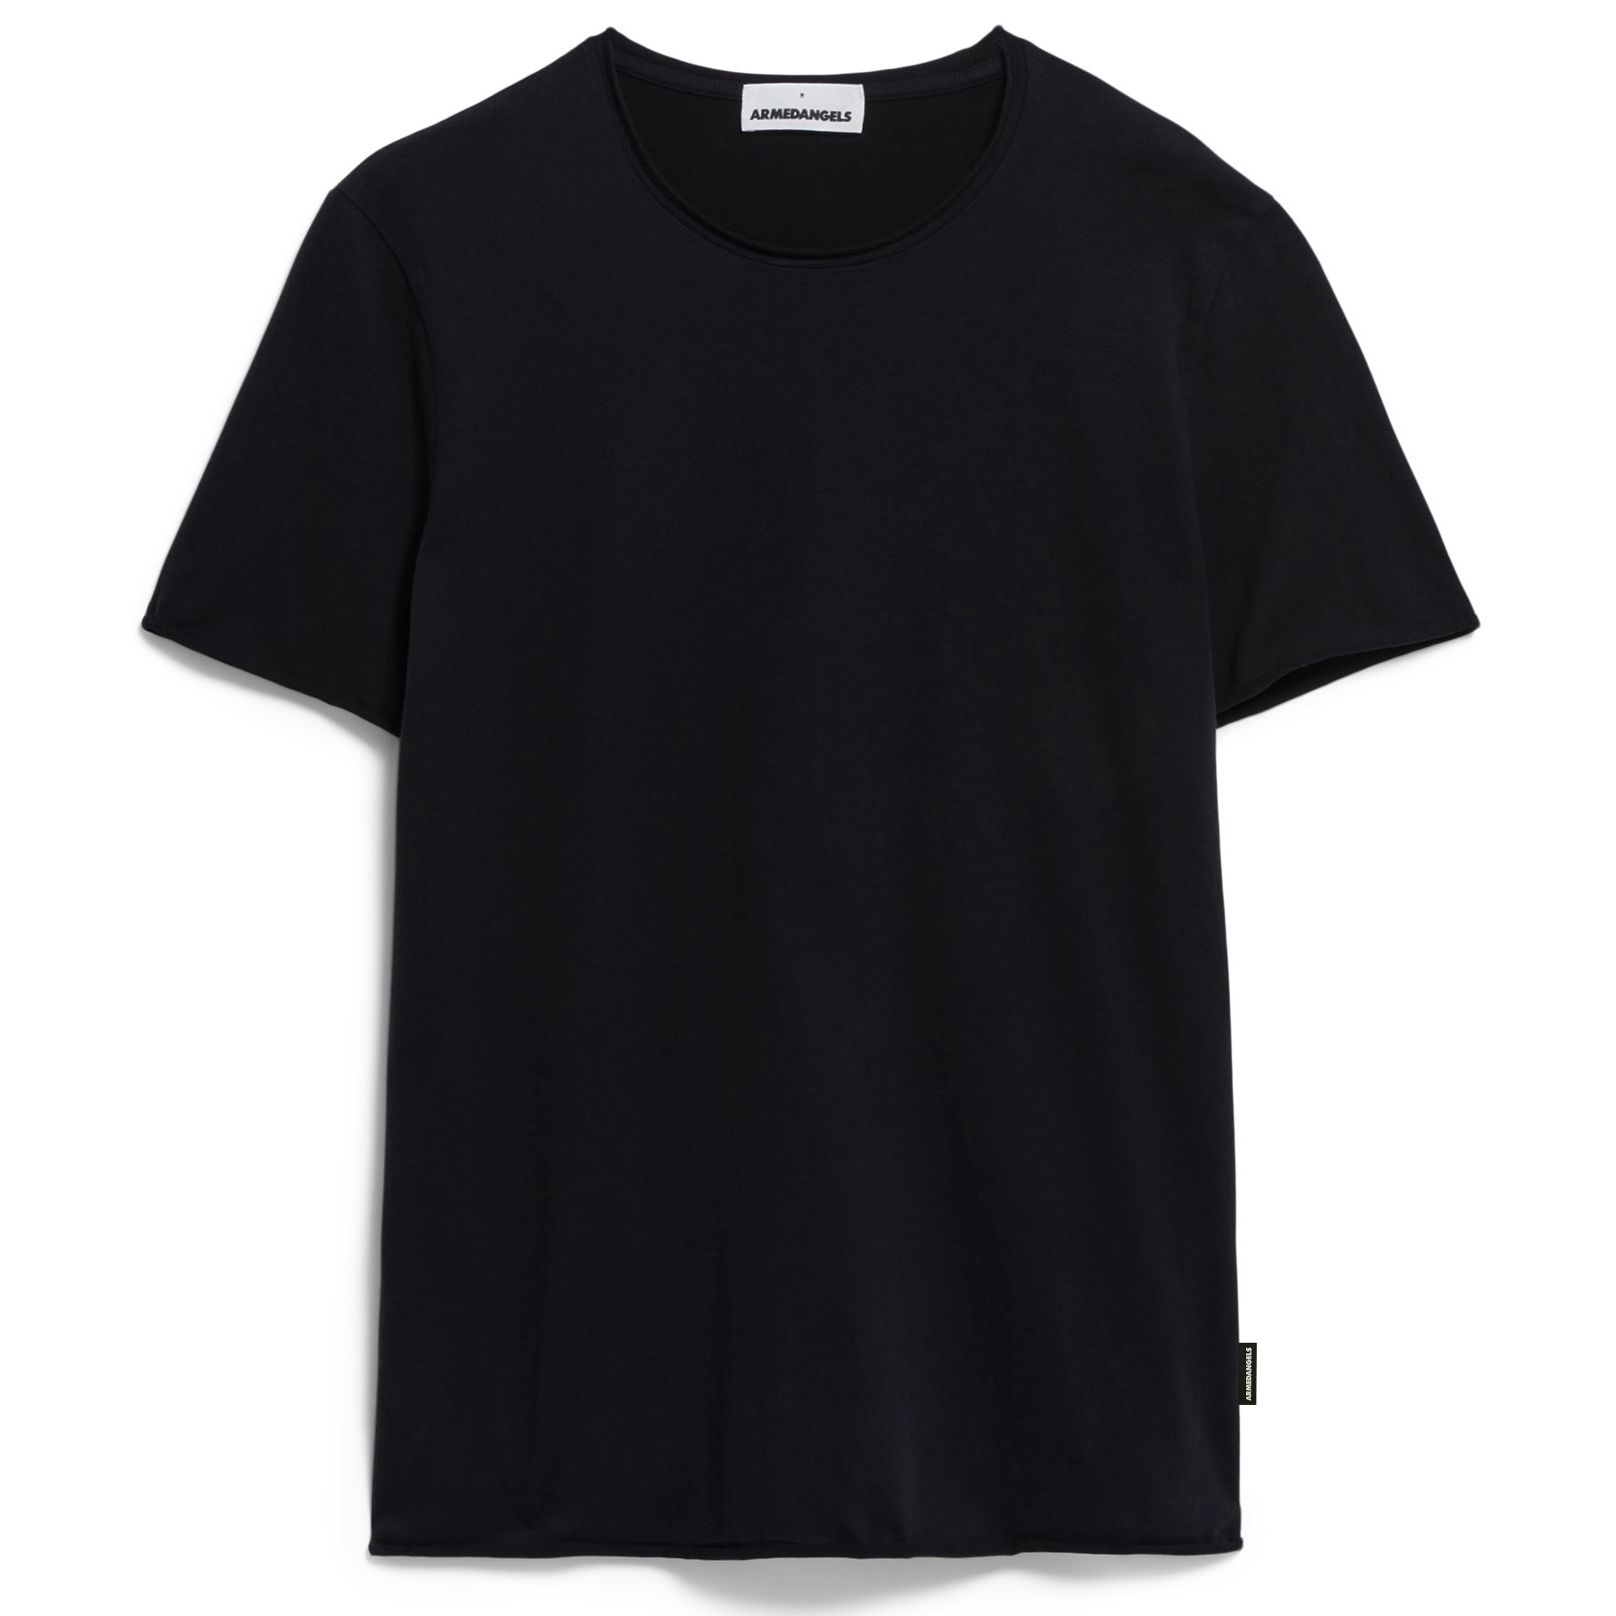 T-Shirt AAMON BRUSHED black